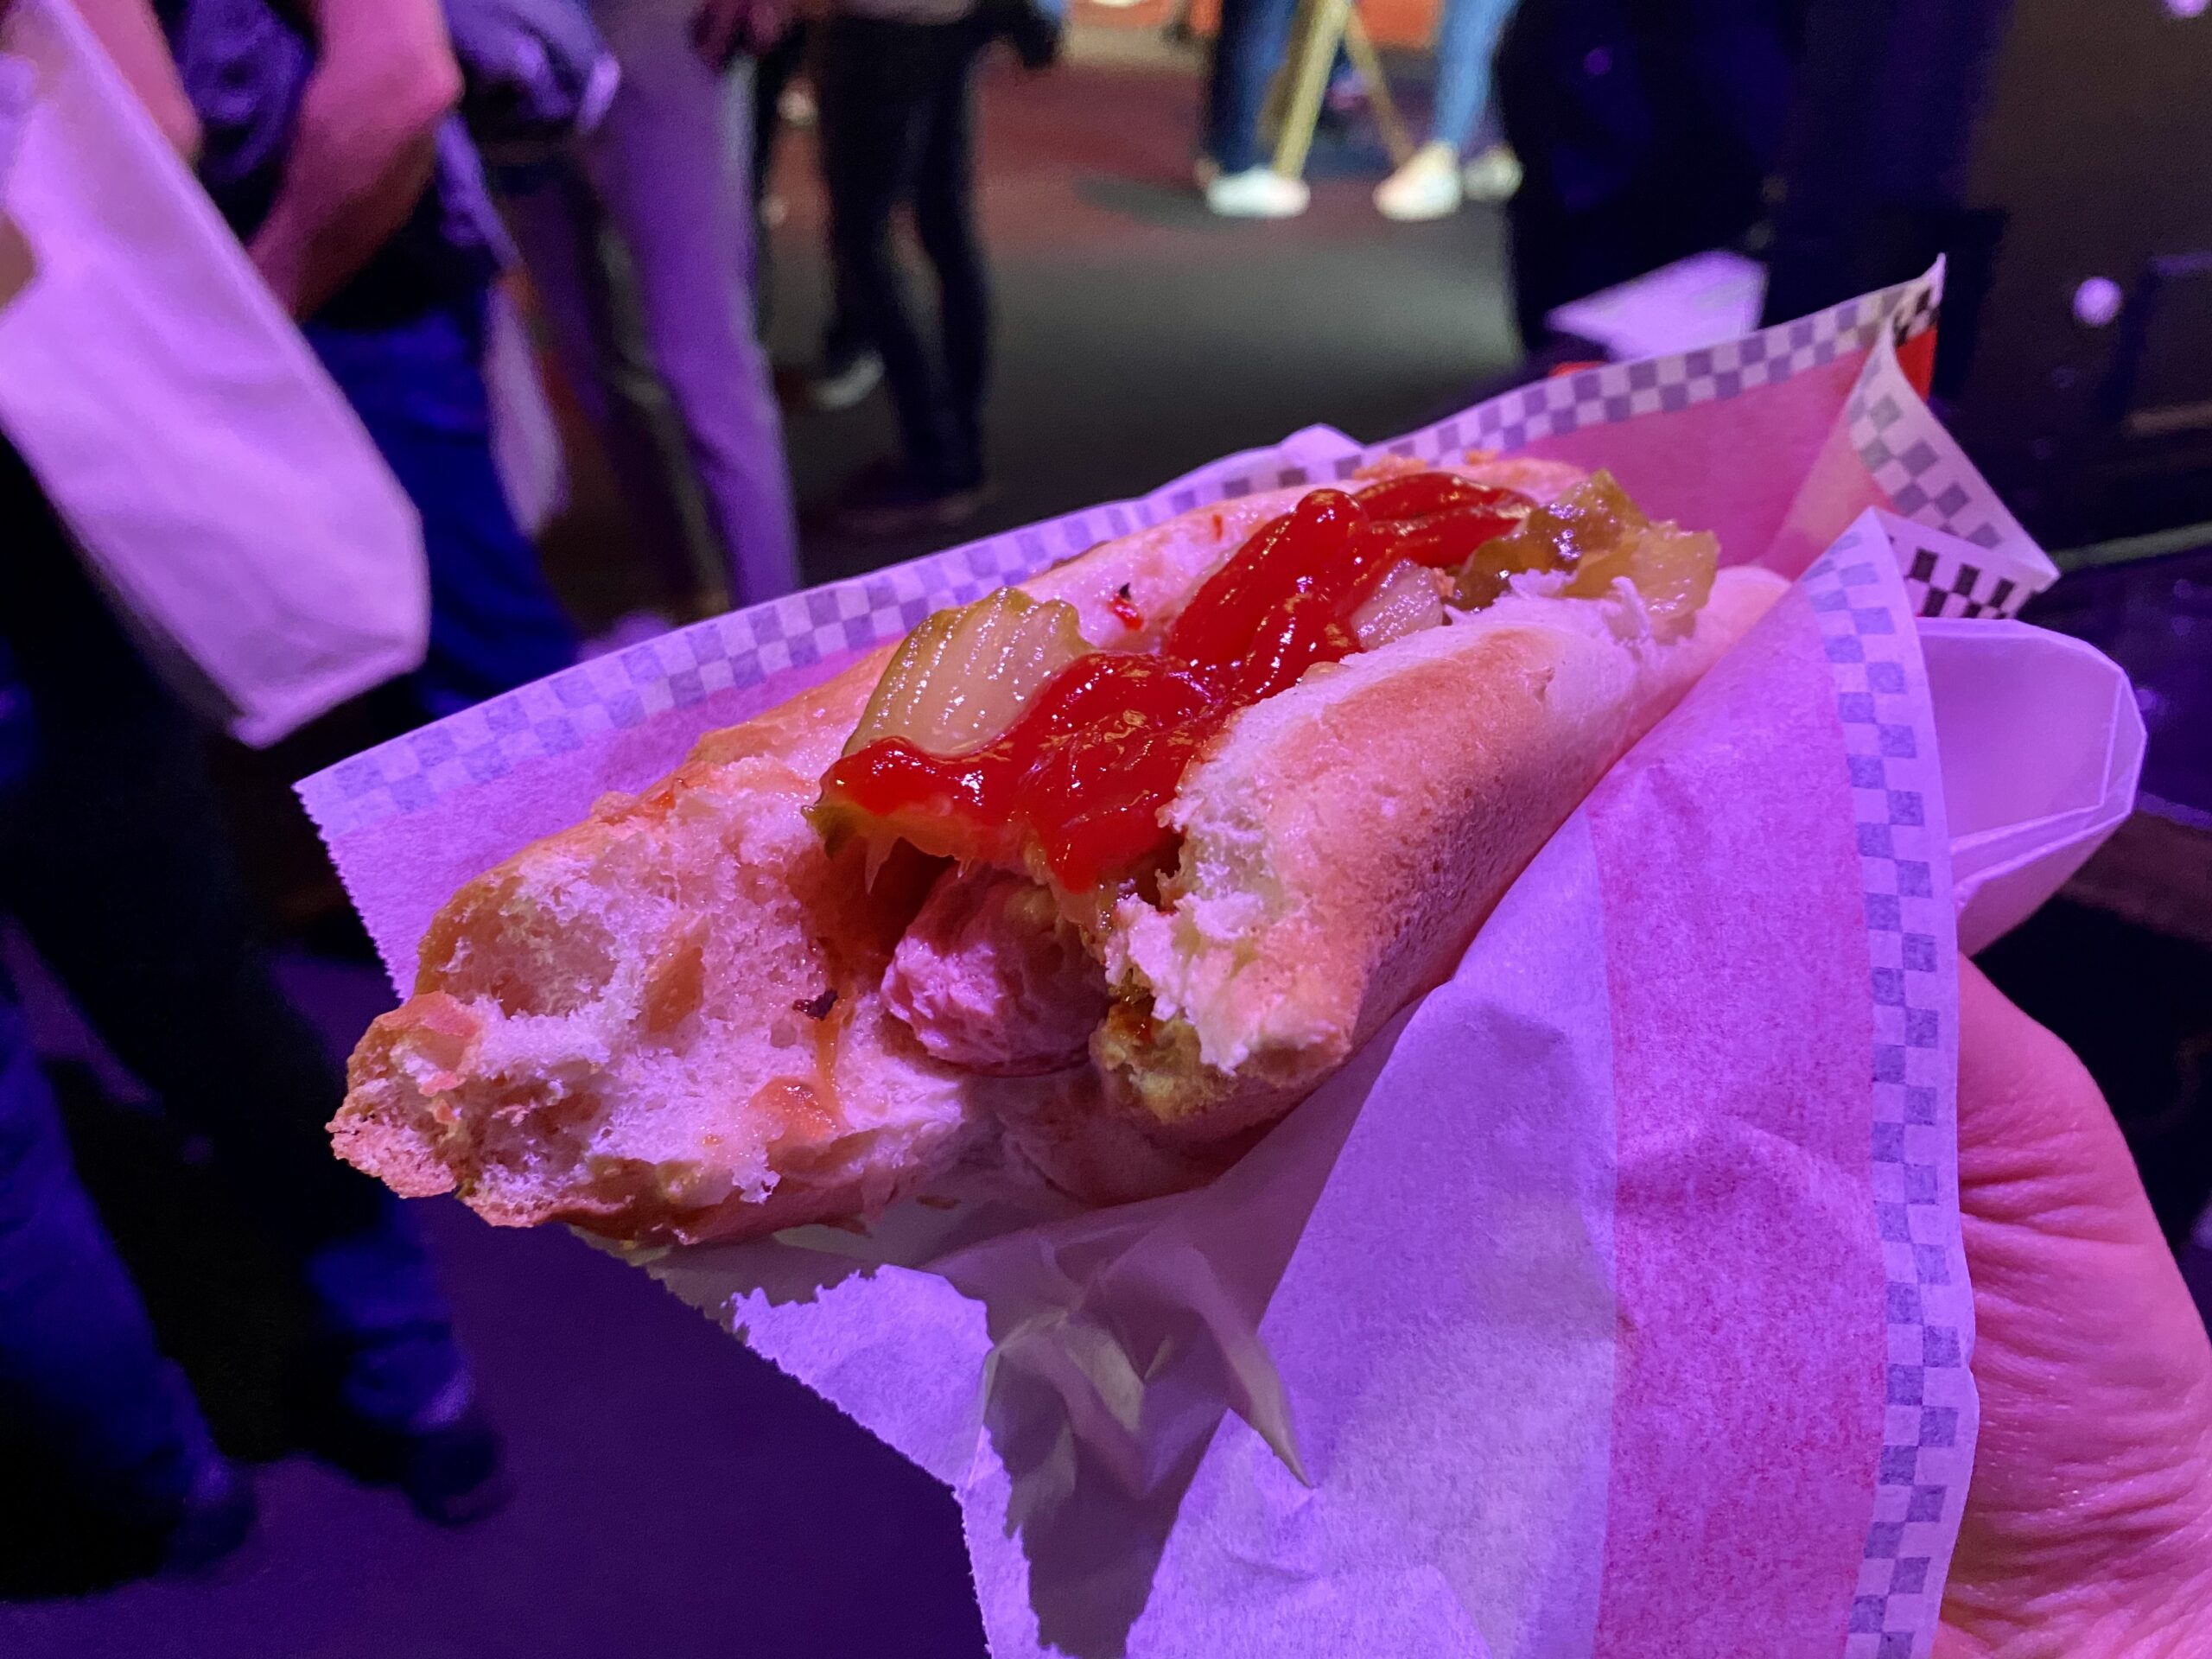 A hot dog with ketchup, roasted garlic and picles